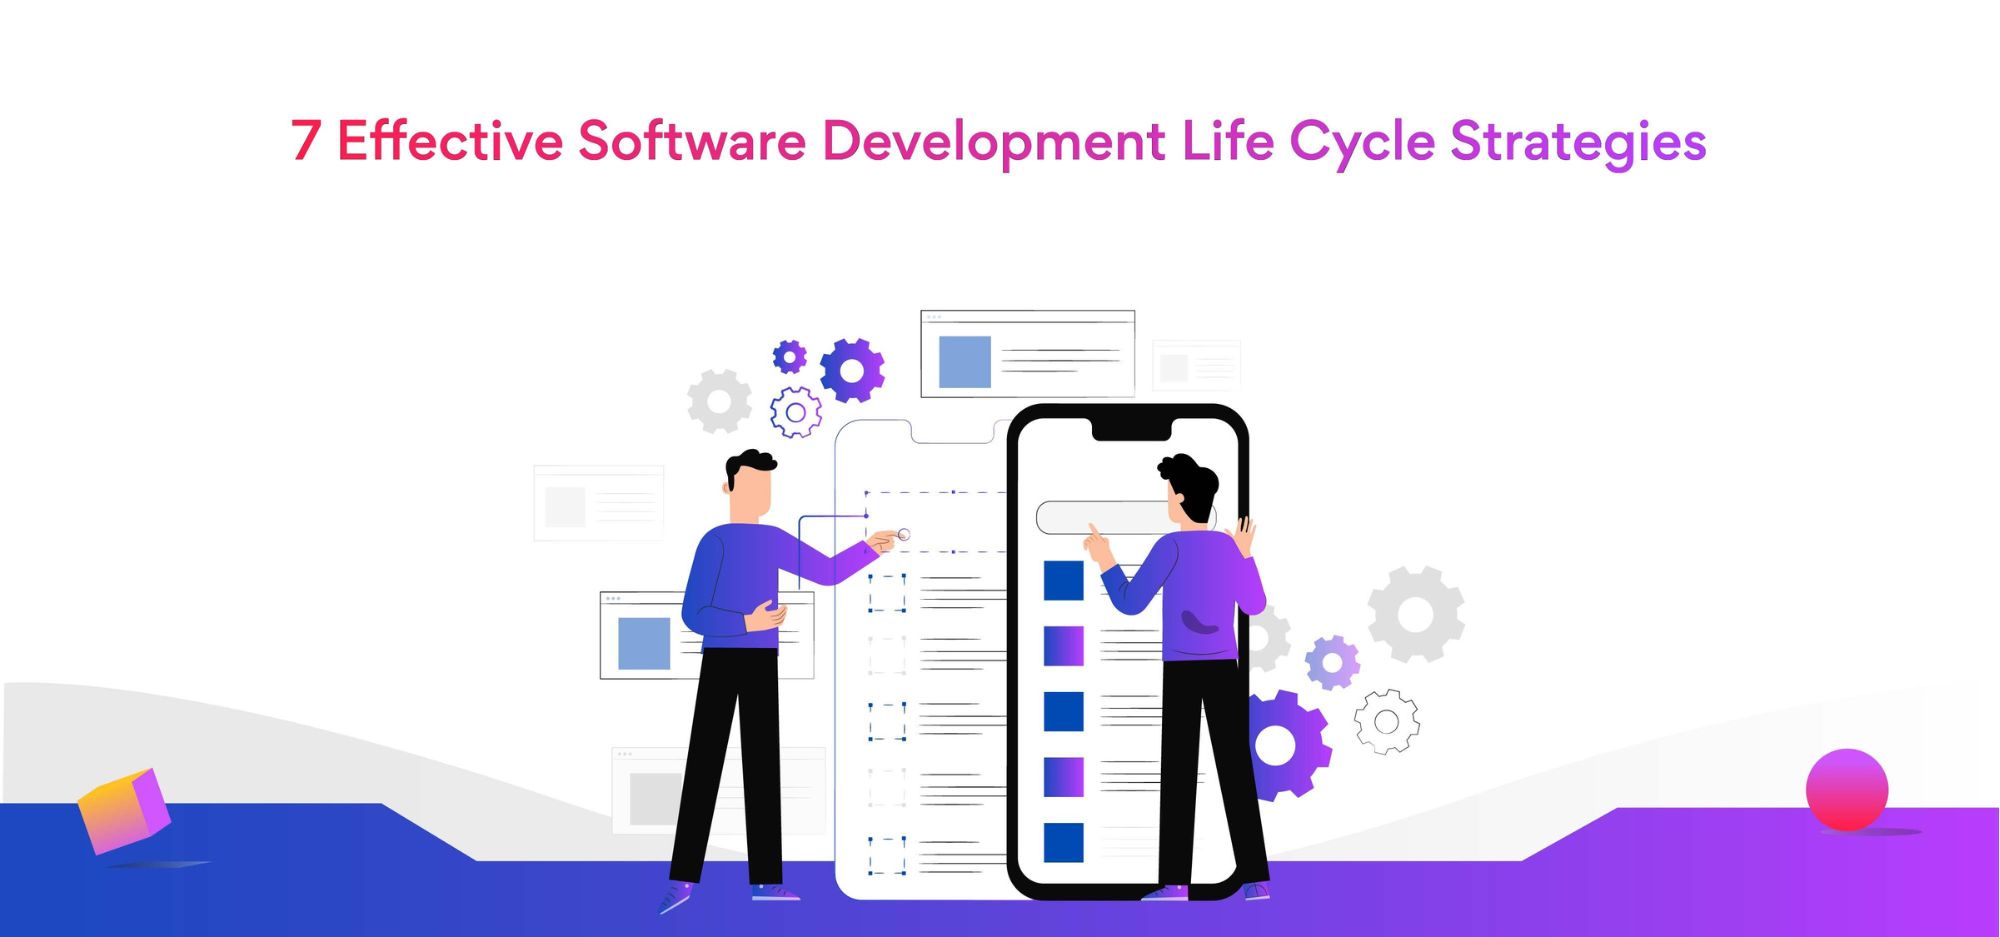 Software Development Life Cycle Strategies